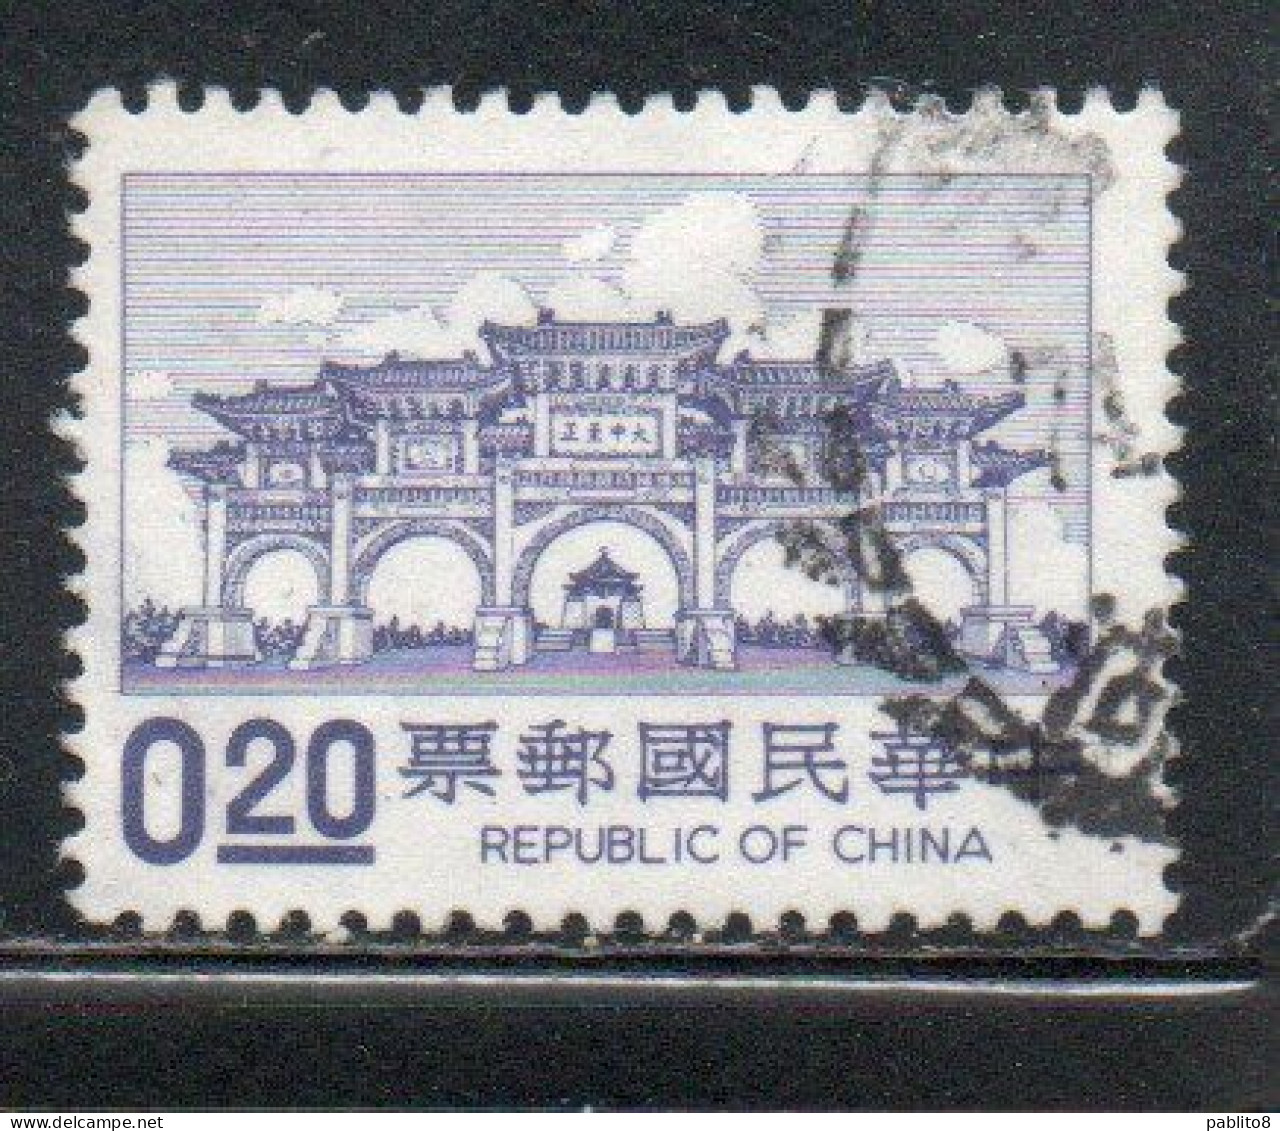 CHINA REPUBLIC CINA TAIWAN FORMOSA 1981 CHIANG KAI-SHEH MEMORIAL HALL 20c USED USATO OBLITERE' - Oblitérés